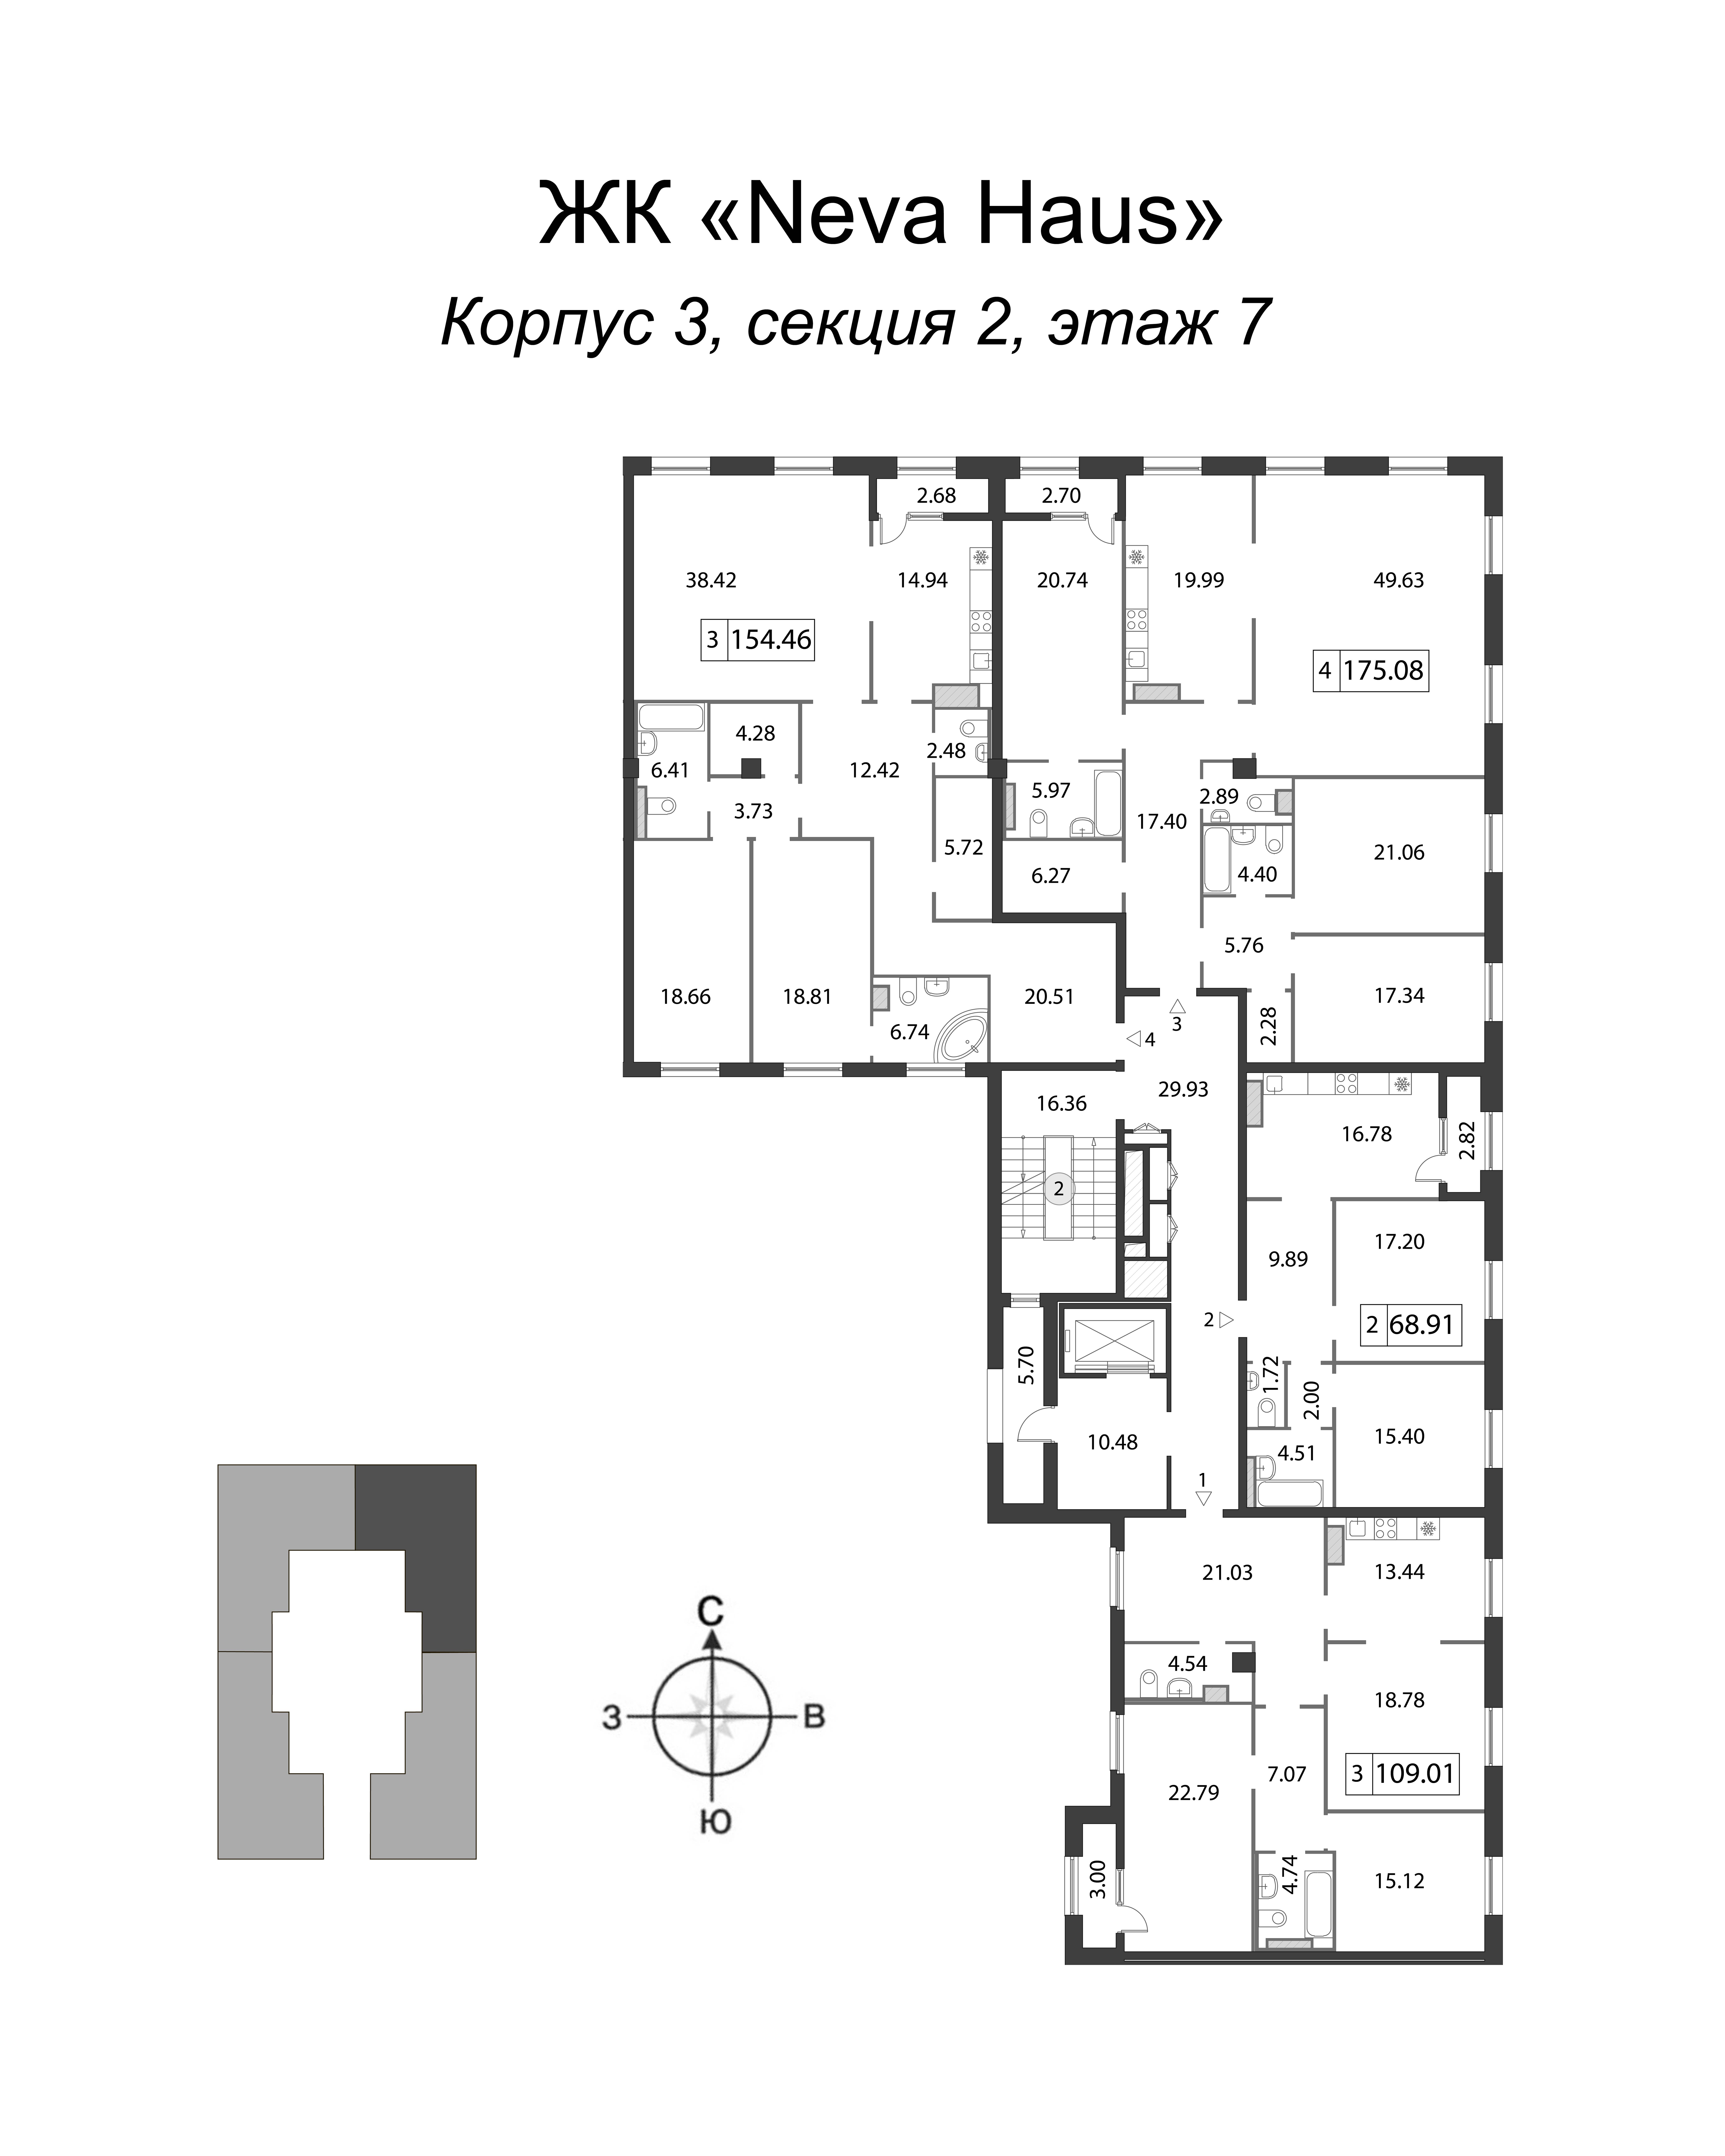 3-комнатная (Евро) квартира, 69.4 м² - планировка этажа